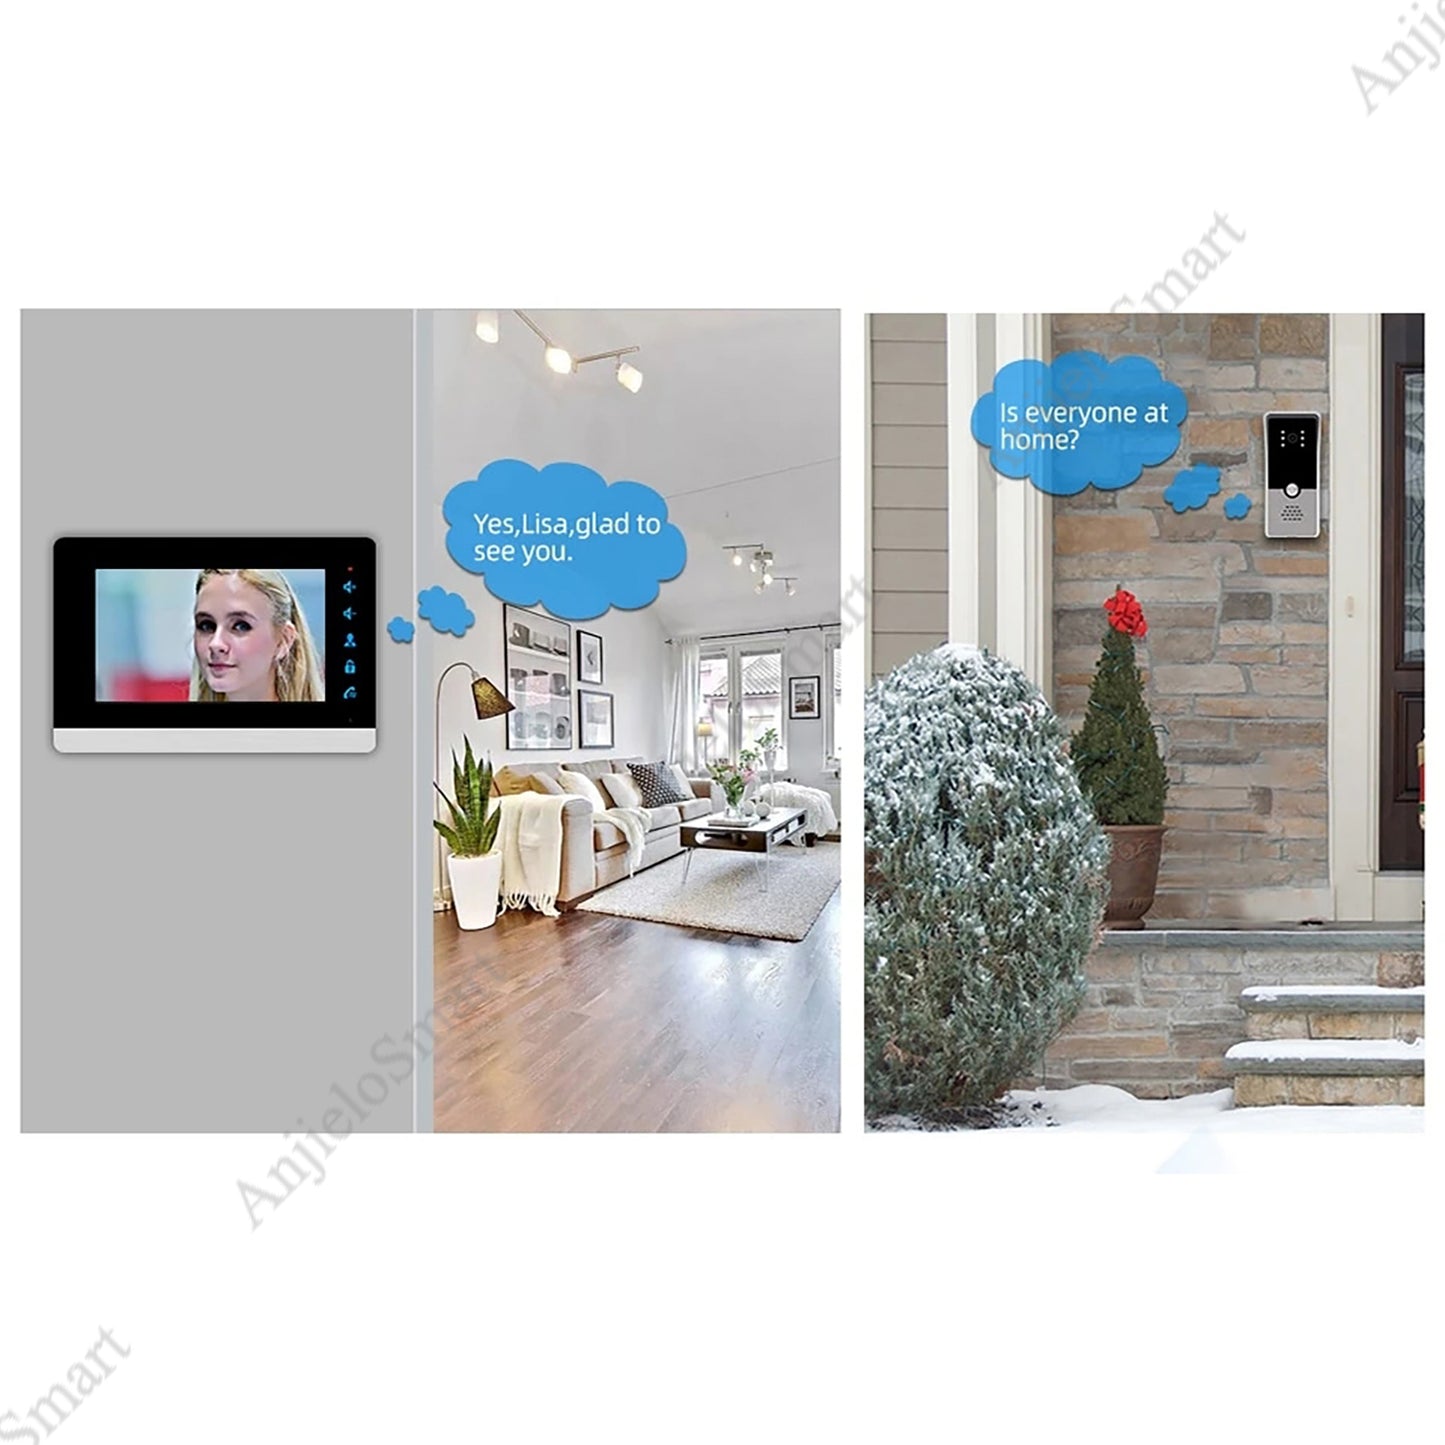 AnjieloSmart 7'' Video Intercom Video Door Phone System, 600TVL Wide Angle Degree Day and Night Vision